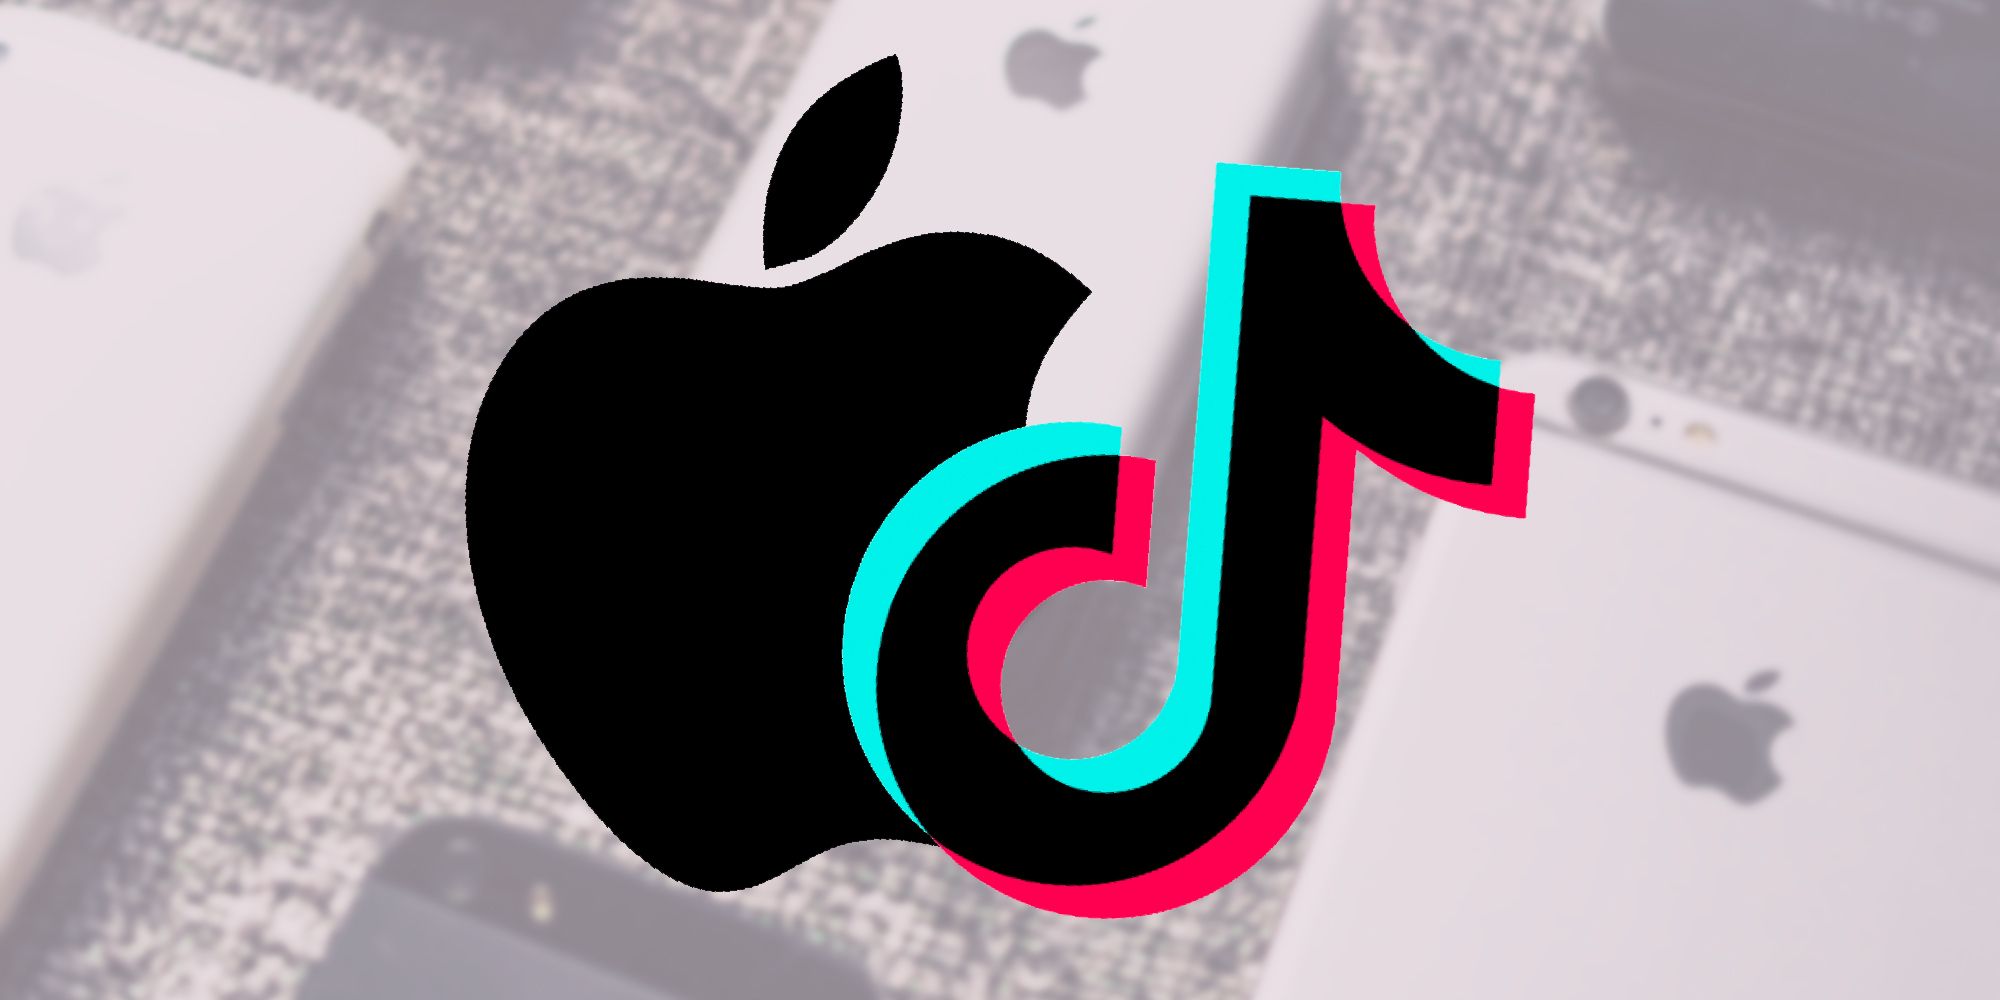 Apple and TikTok logos together